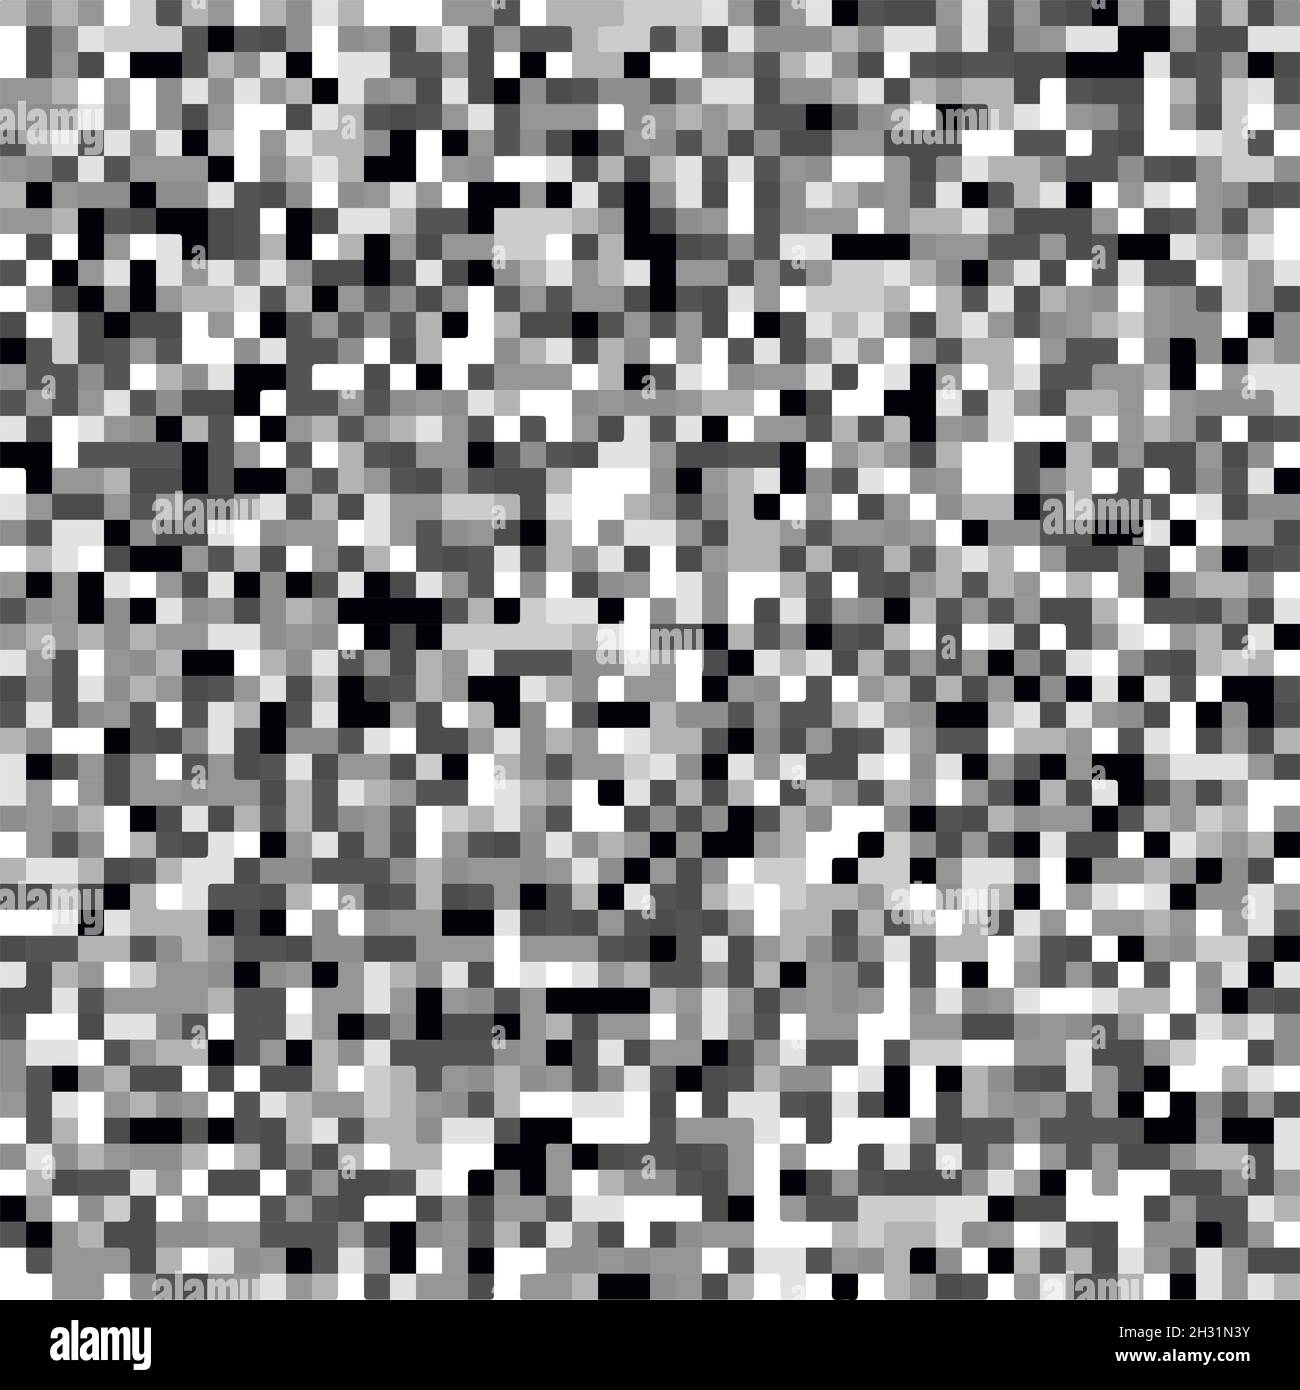 TV screen noise pixel glitch texture background vector illustration. Stock Vector